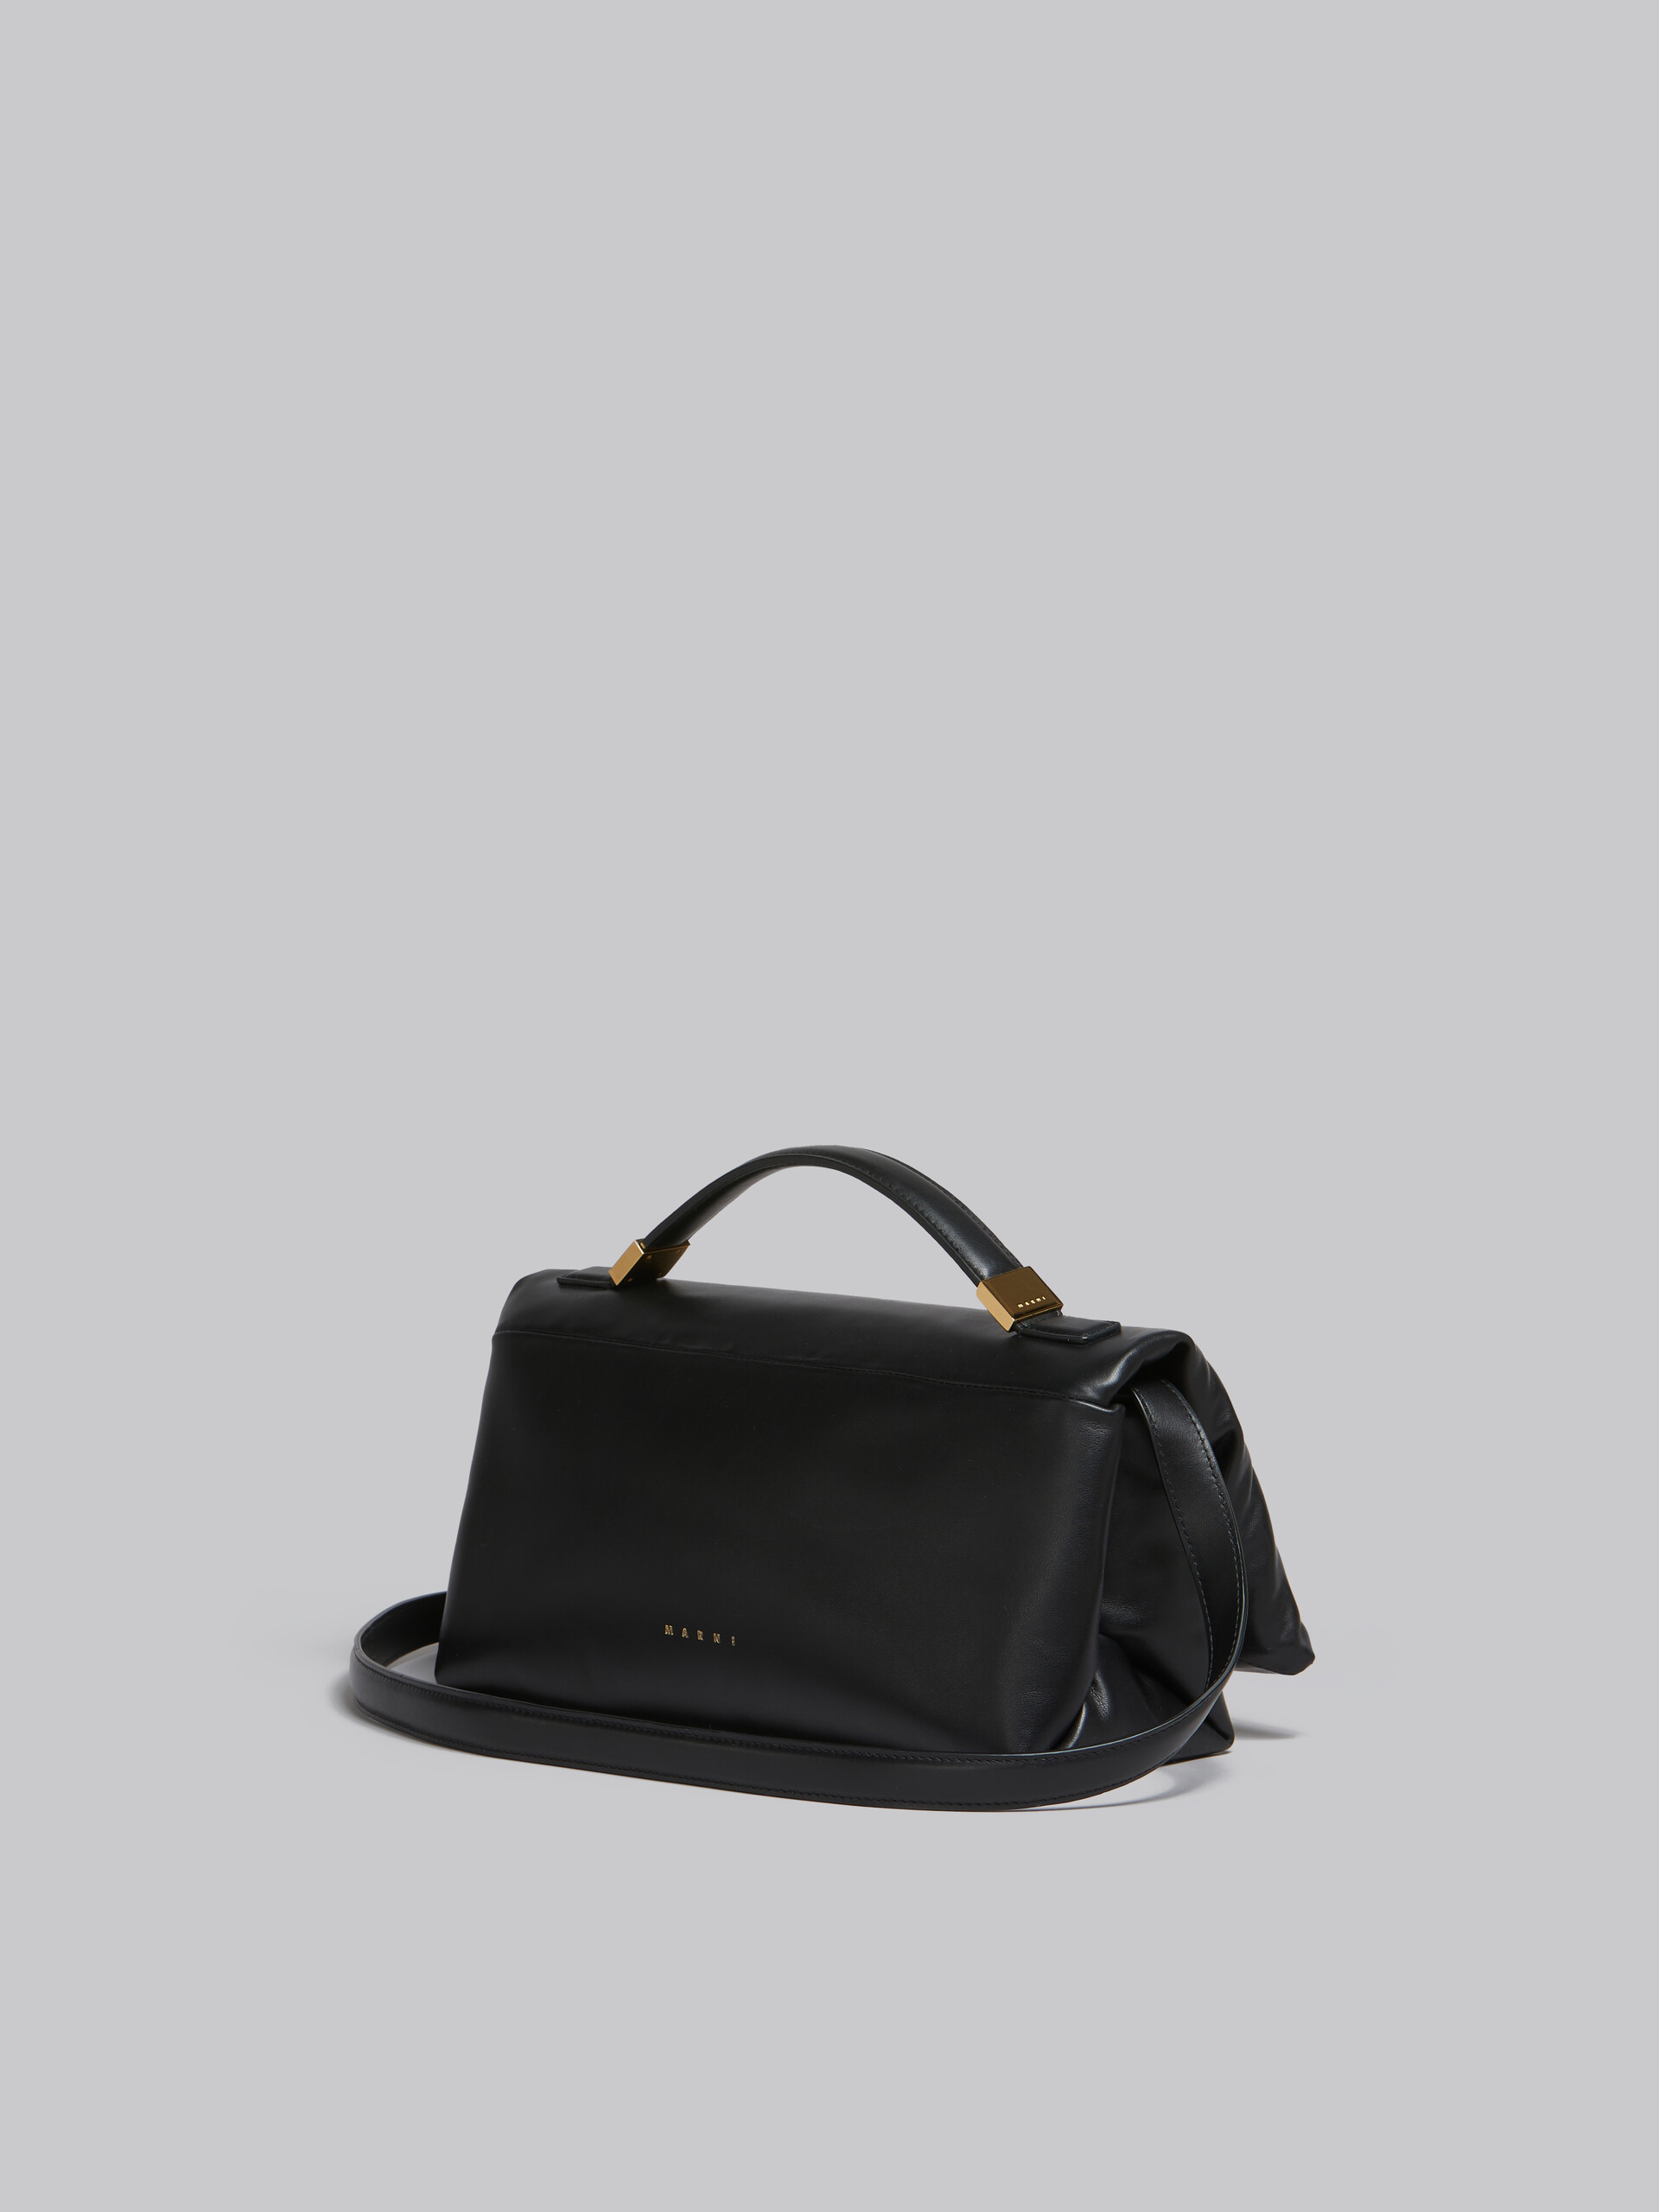 Black leather Prisma top handle bag - Handbag - Image 2